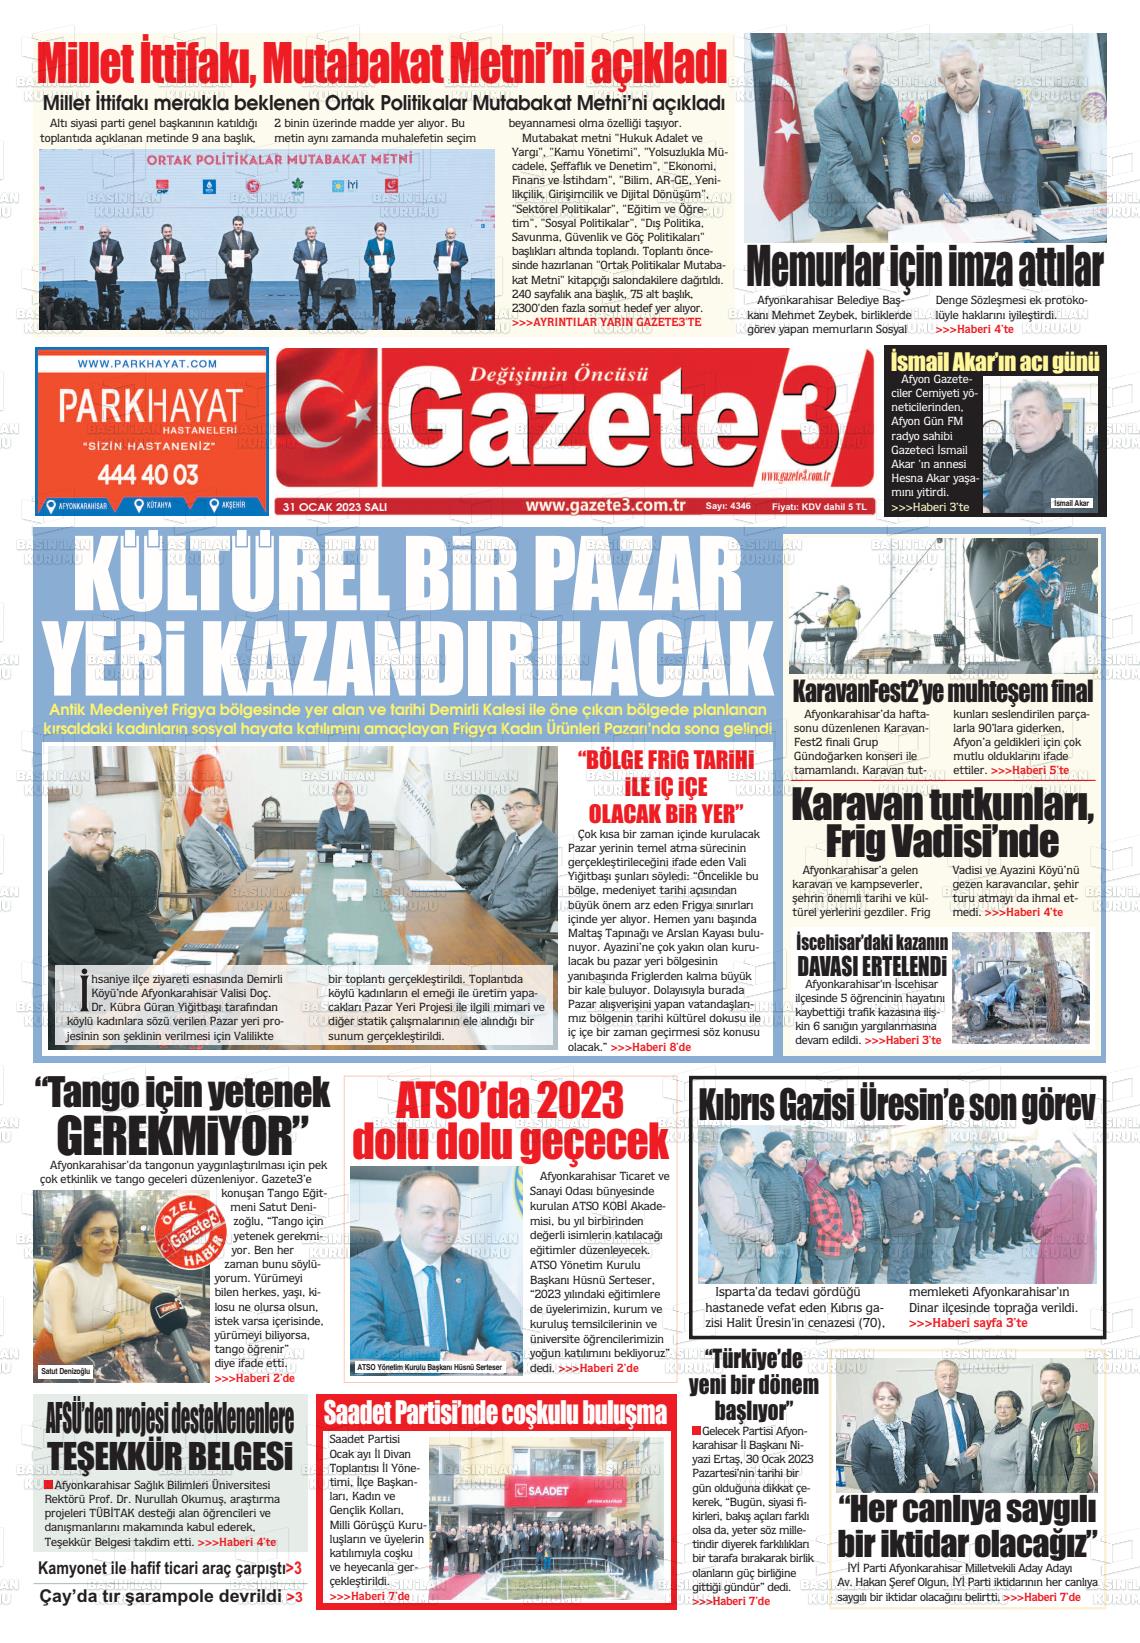 31 Ocak 2023 Gazete 3 Gazete Manşeti